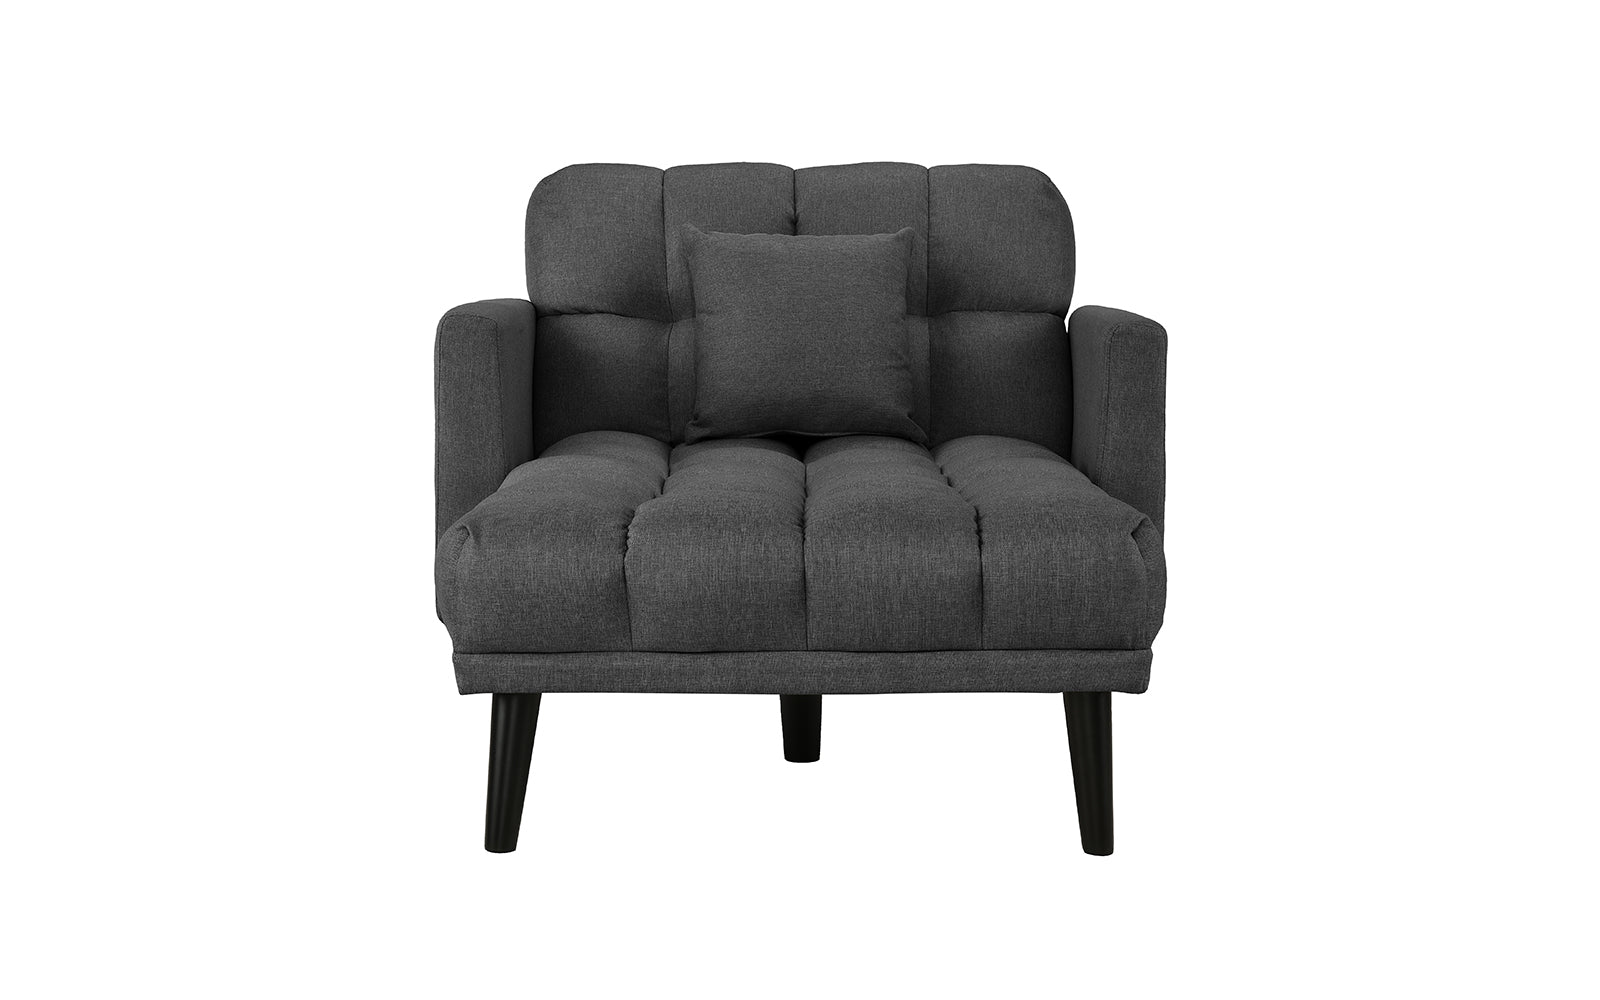 EXP183-FB-DGR Ellery Contemporary Linen Sleeper Chaise Lounge sku EXP183-FB-DGR